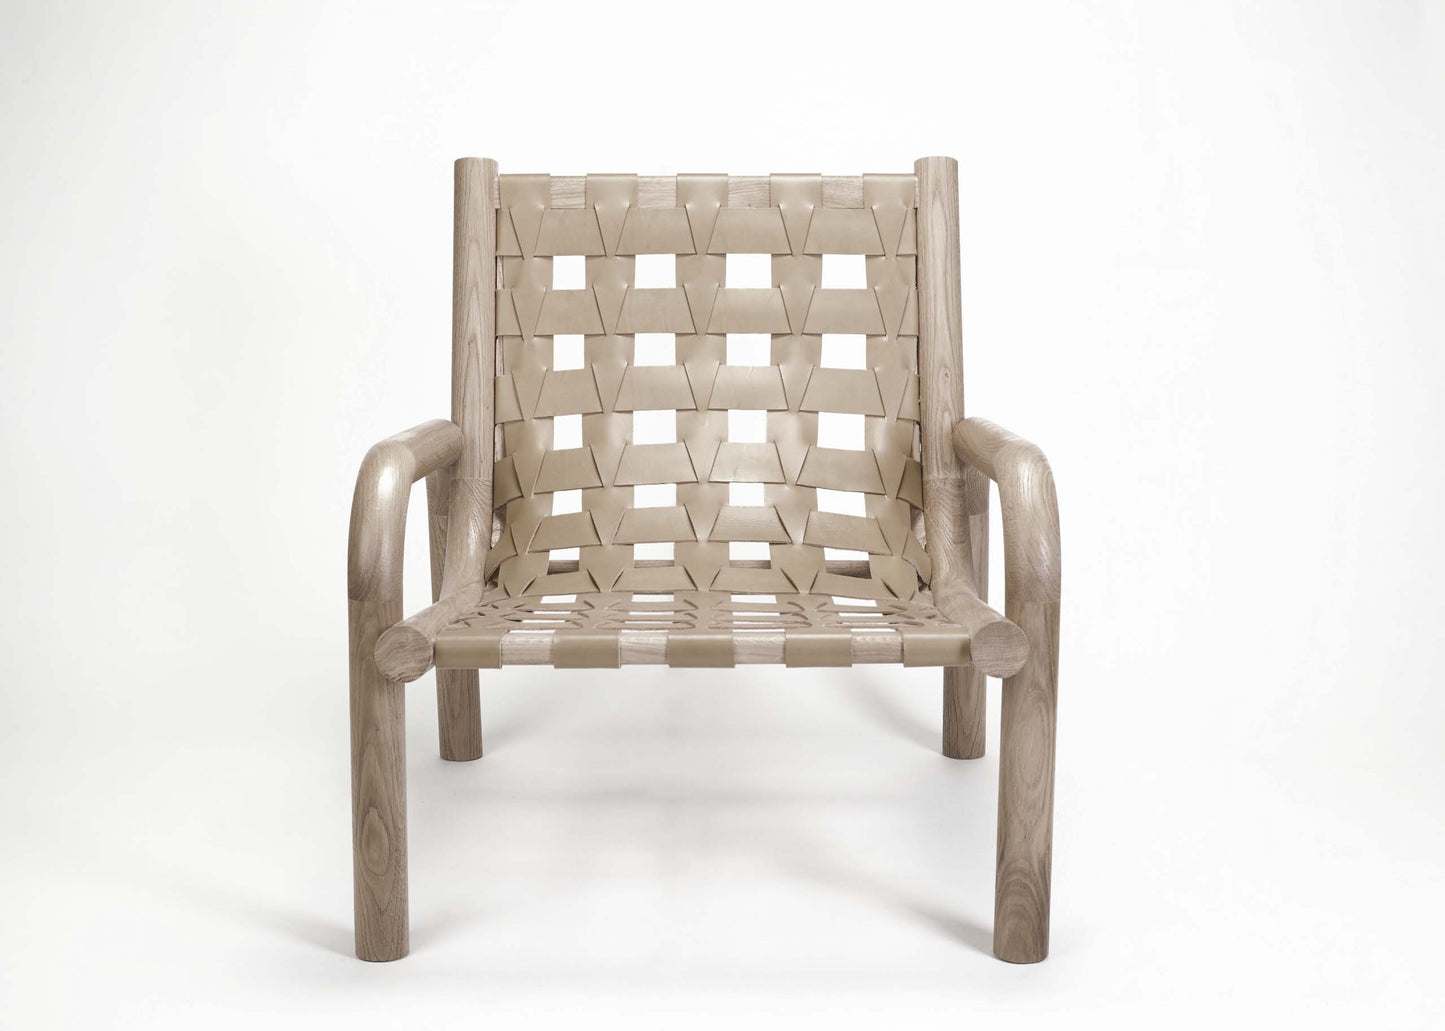 GINGA I Lounge Chair by Duistt